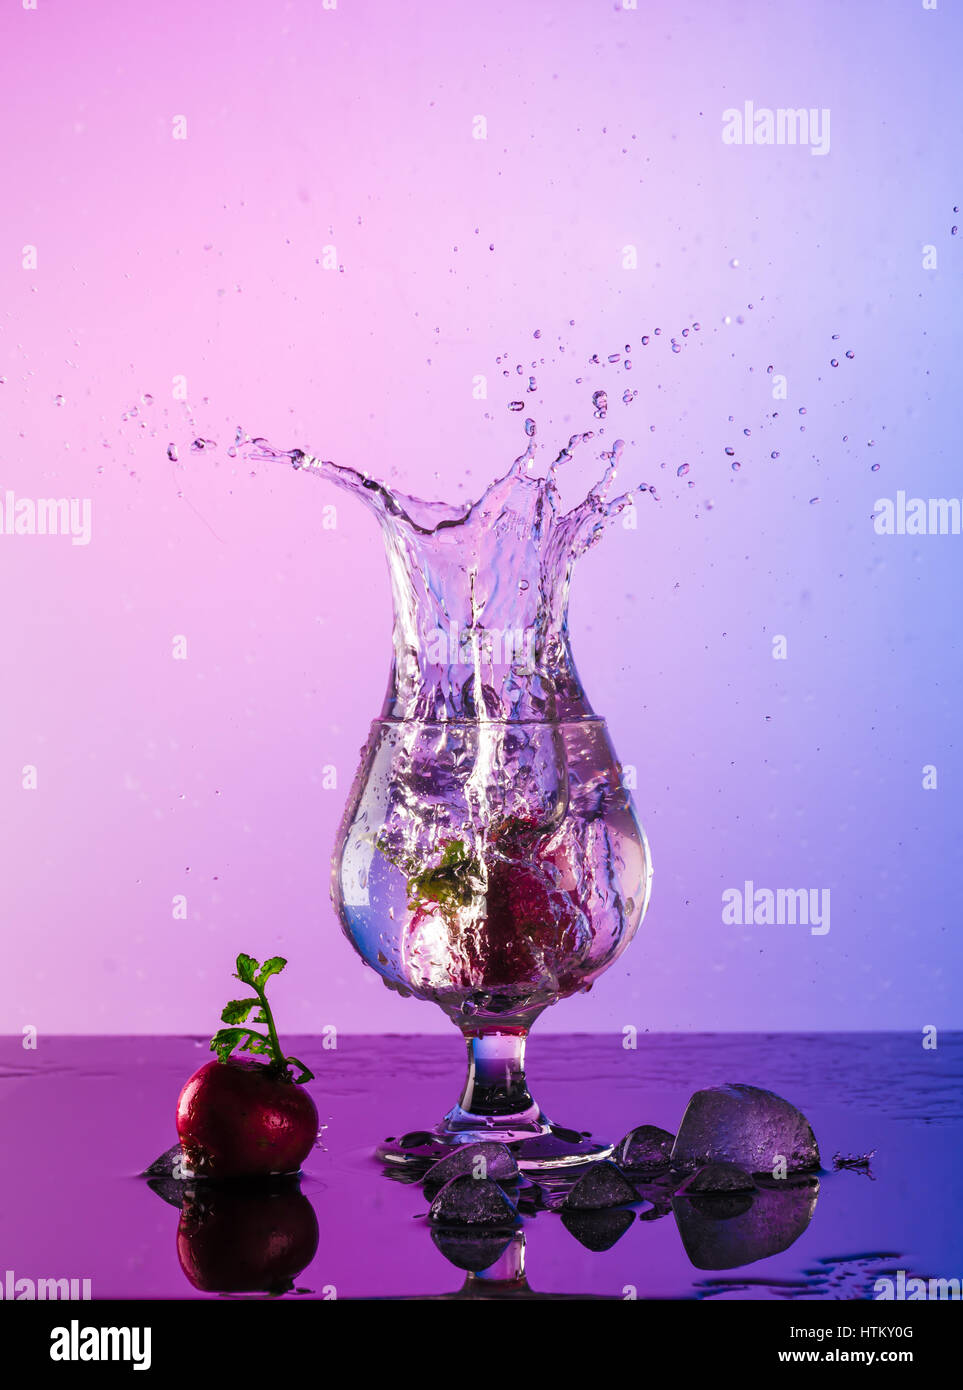 Wasser-Splash-Effekt Stockfoto